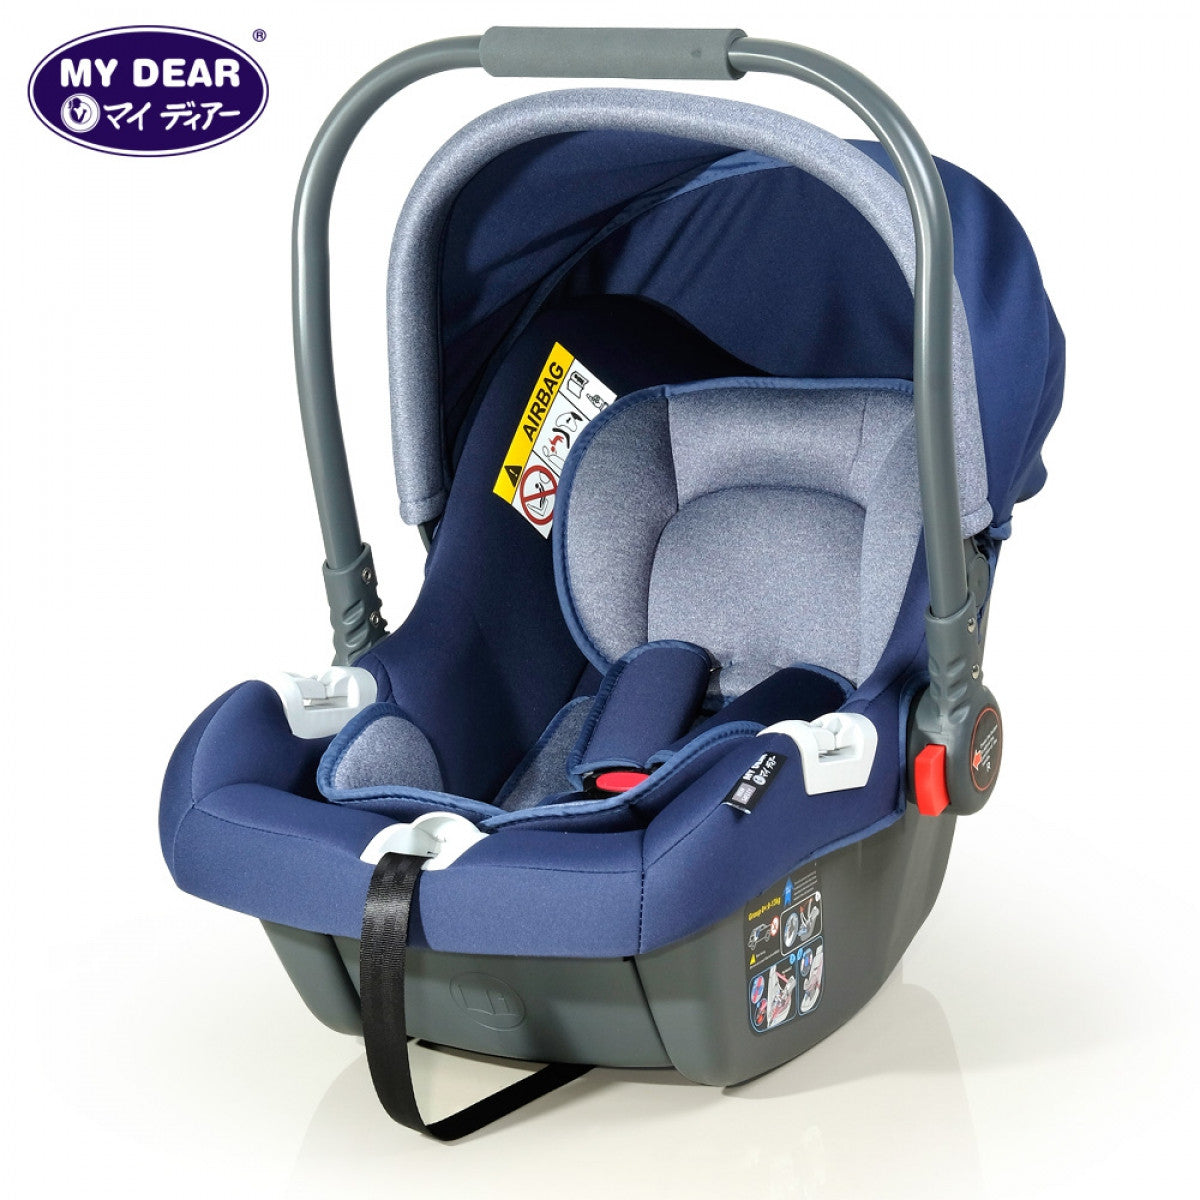 My Dear Infant Baby Carrier / Infant Car Seat 28040